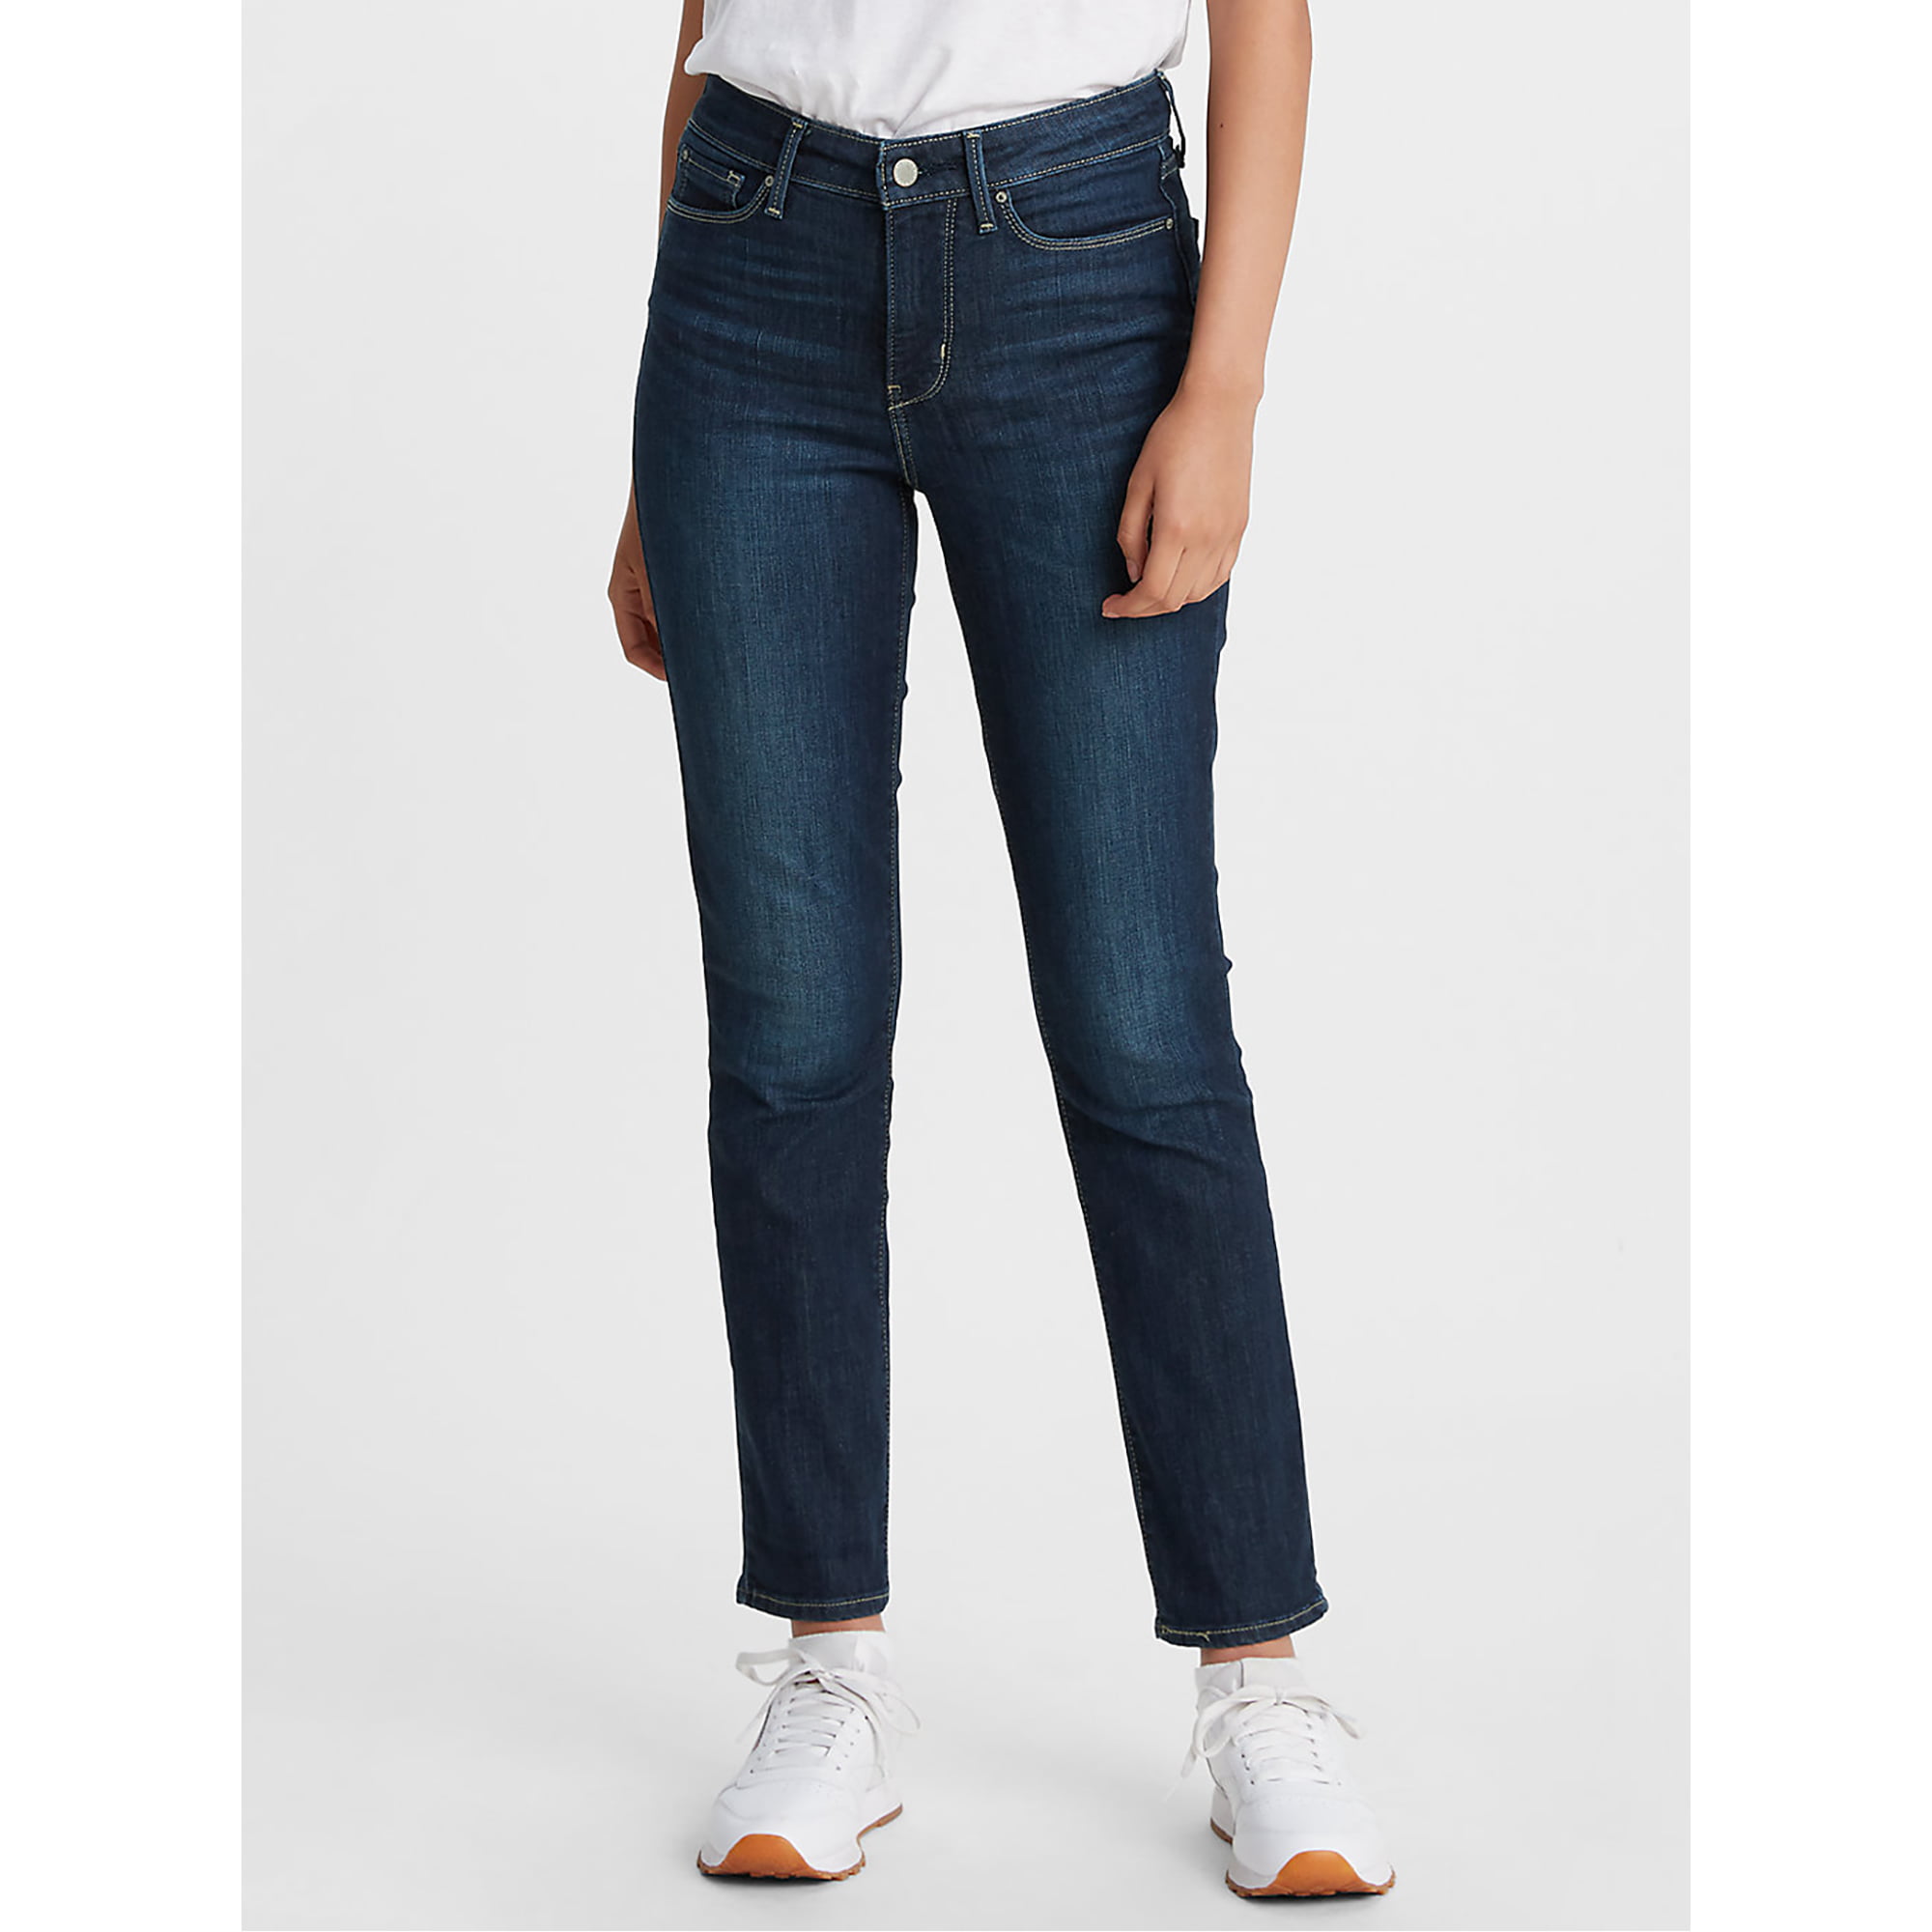 by Levi Strauss & Co. Women's Mid Rise Jeans Walmart.com